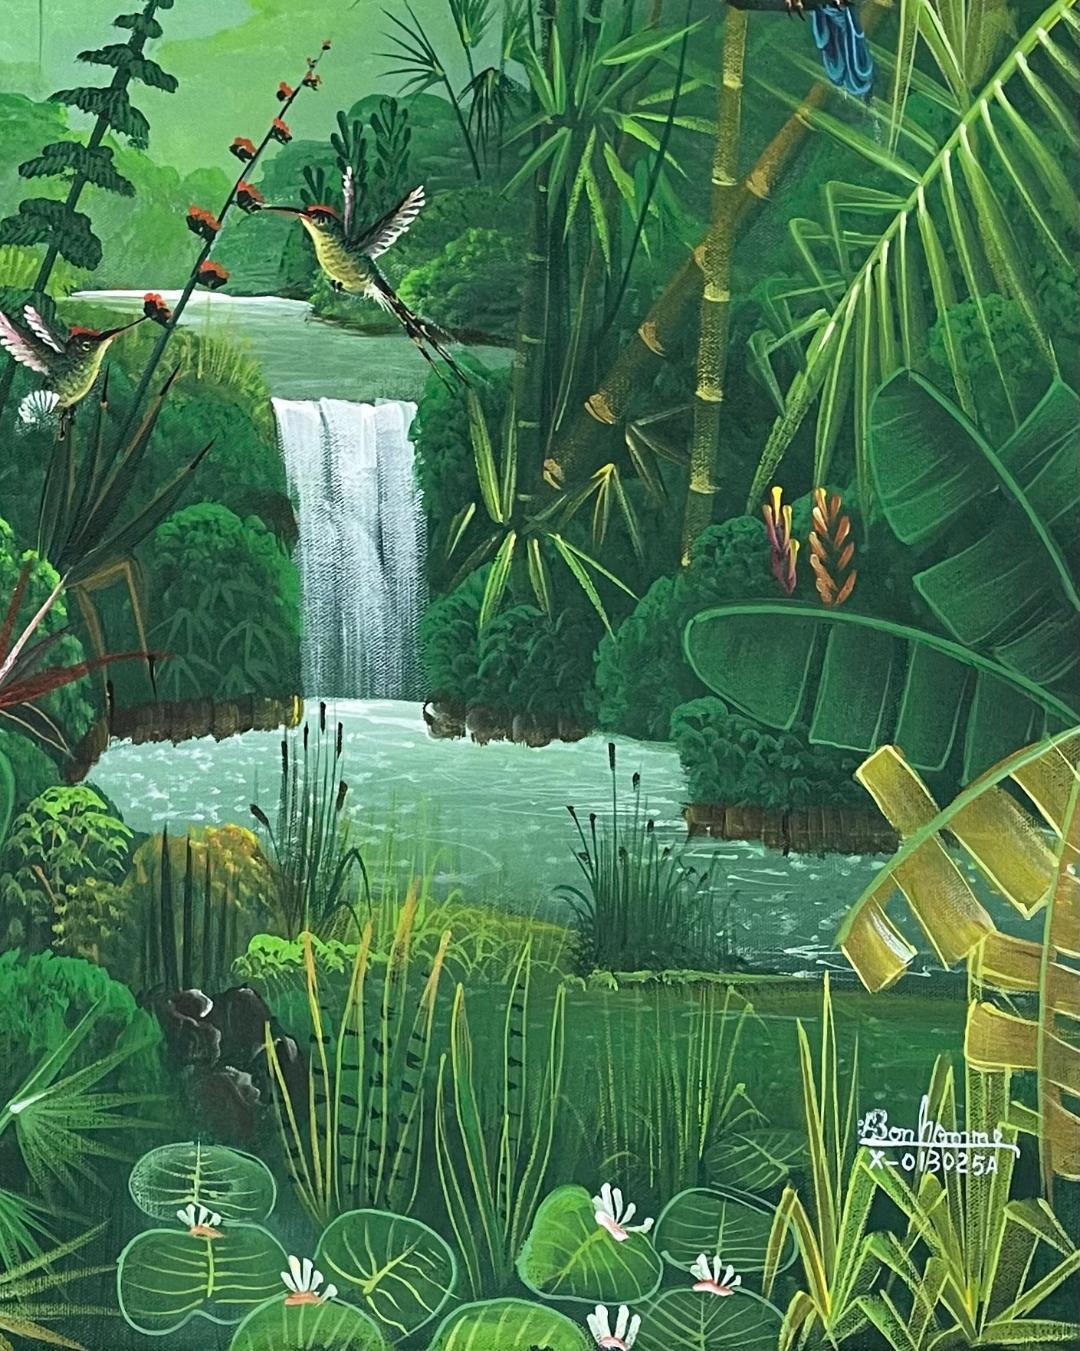 30"x24" Lush Tropical Paradise 2022 Original Contemporary Painting  - Art by Albott Bonhomme